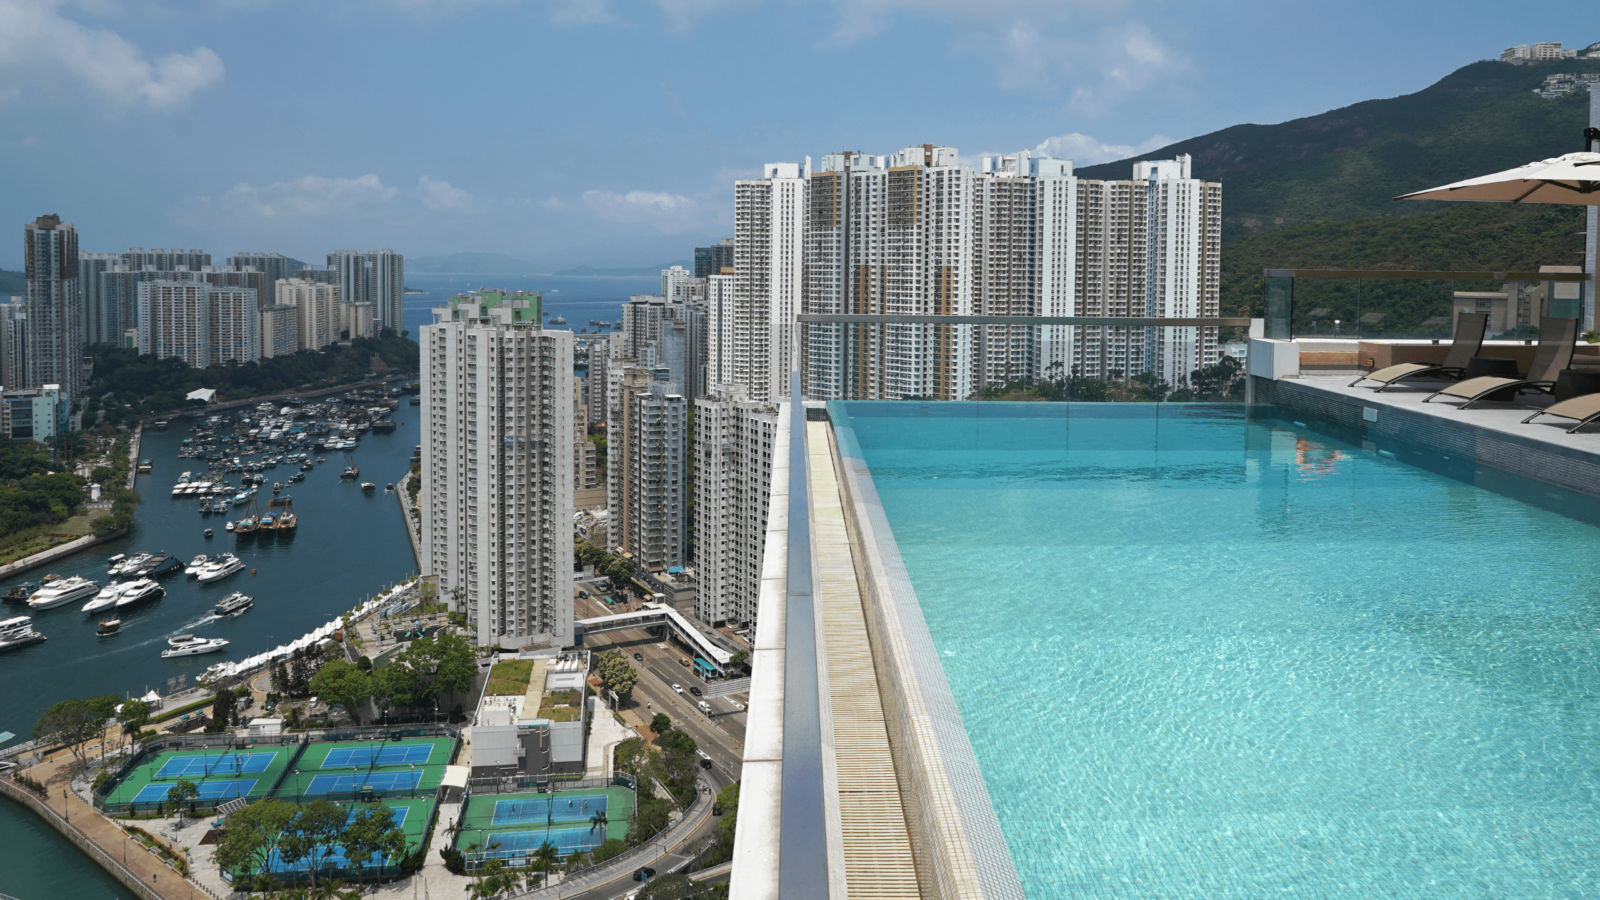 A first look at the Arca, Hong Kong’s newest urban hotel opening in Wong Chuk Hang